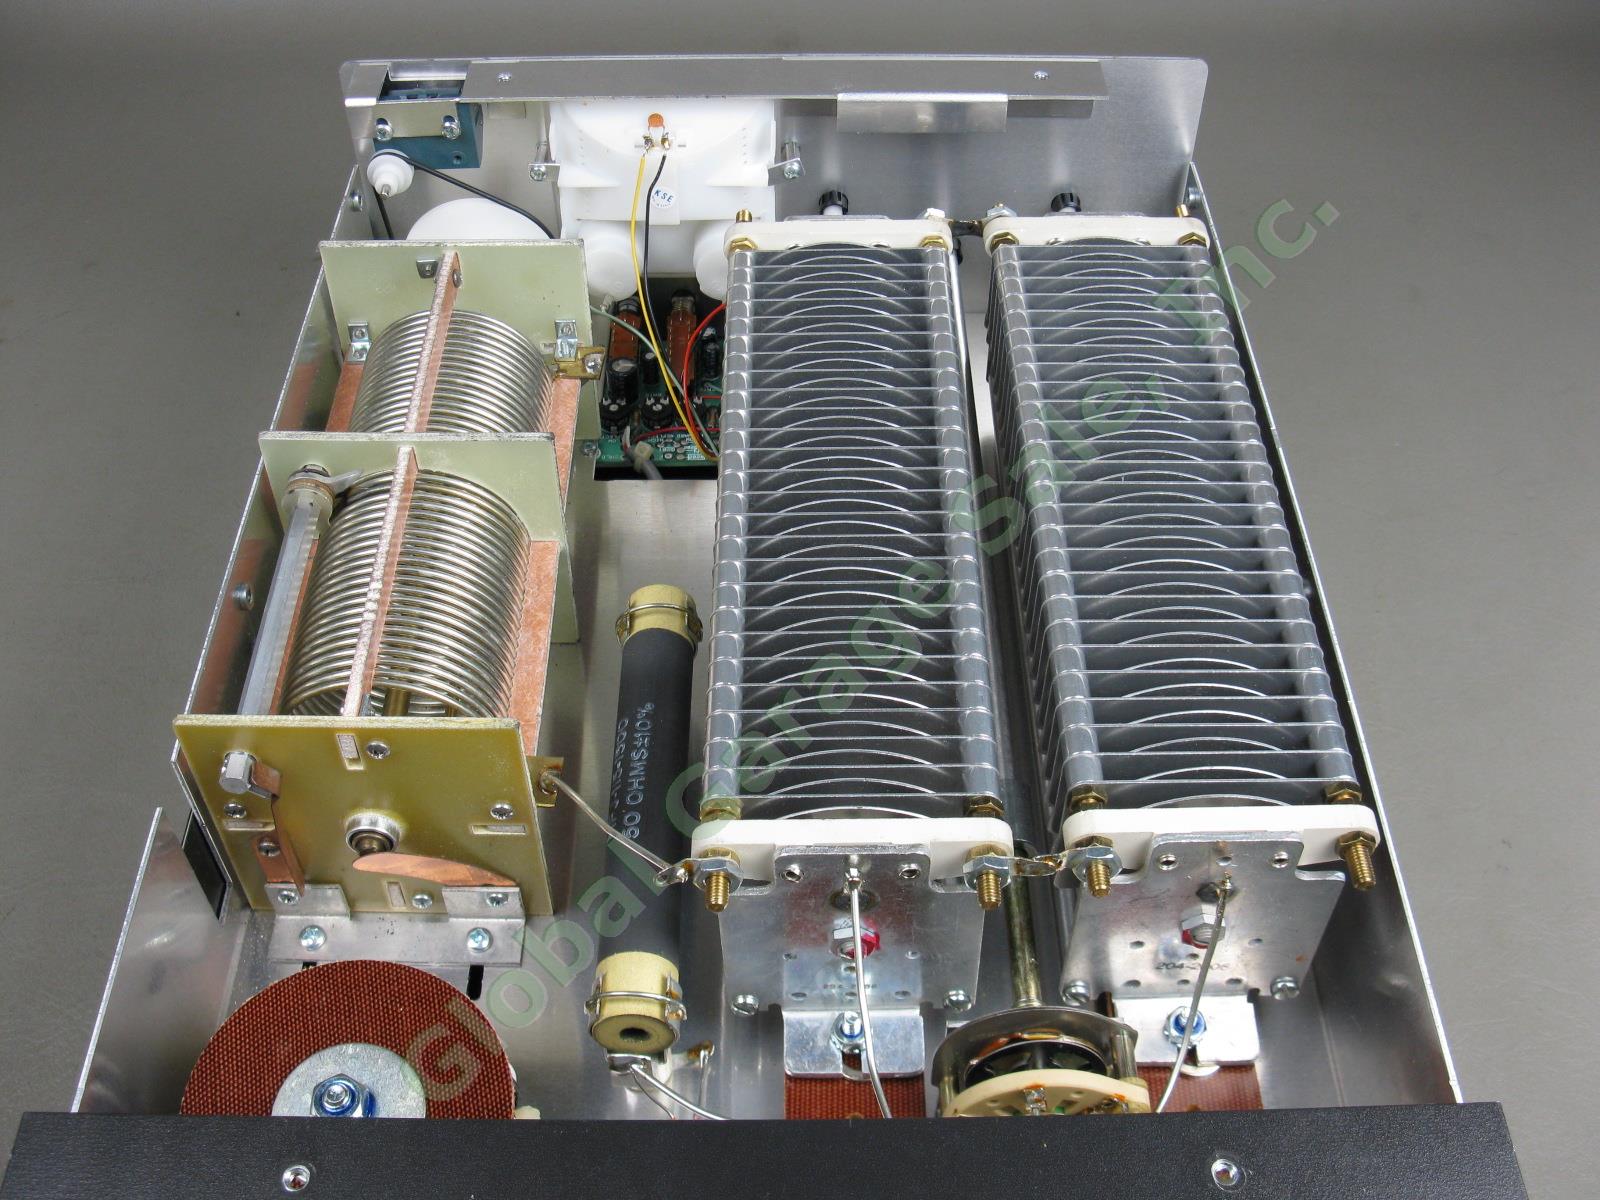 MFJ-989C Versa Ham Radio Antenna Tuner V 3KW Series Roller Inductor Parts/Repair 9